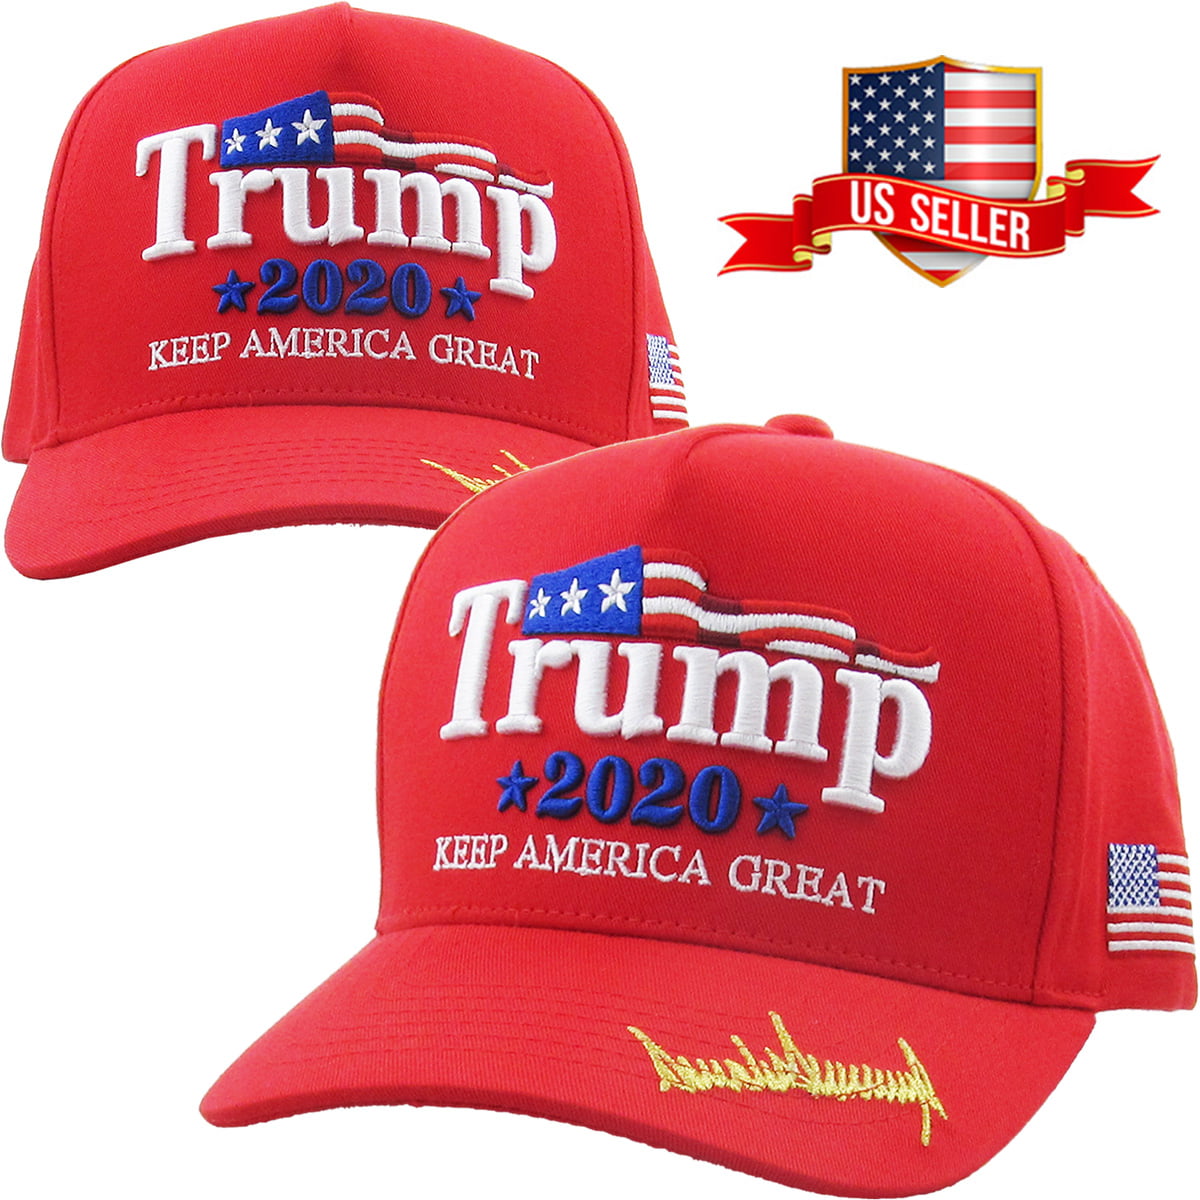 Trump 2020 Hat MAGA Keep Make America Great KAG Make America Great Again US New 